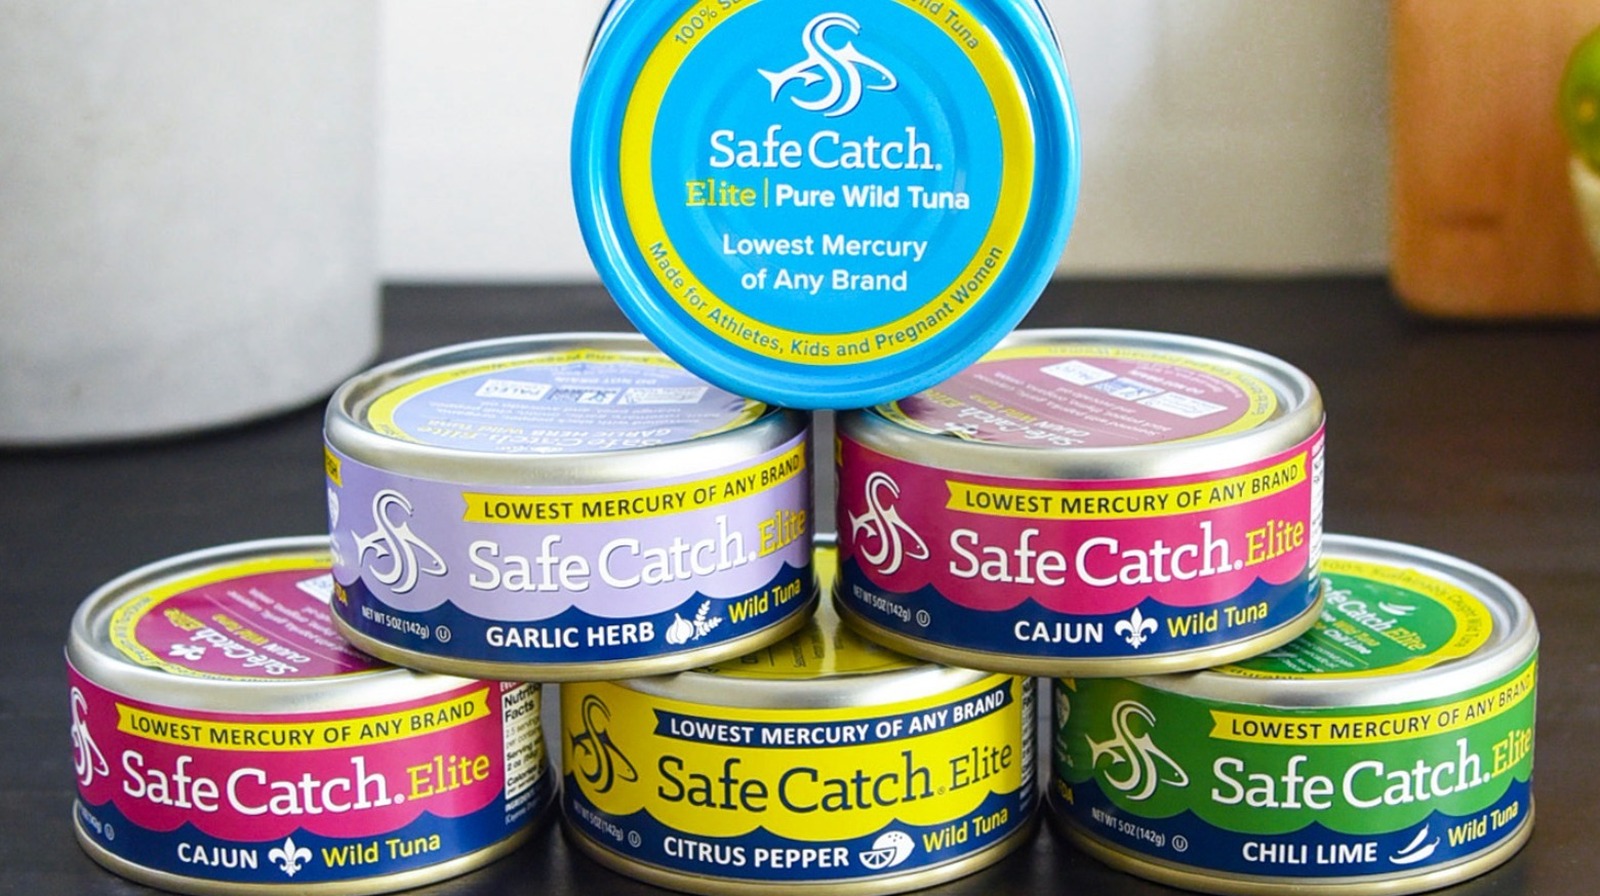 Safe Catch (@safecatchfoods) • Instagram photos and videos